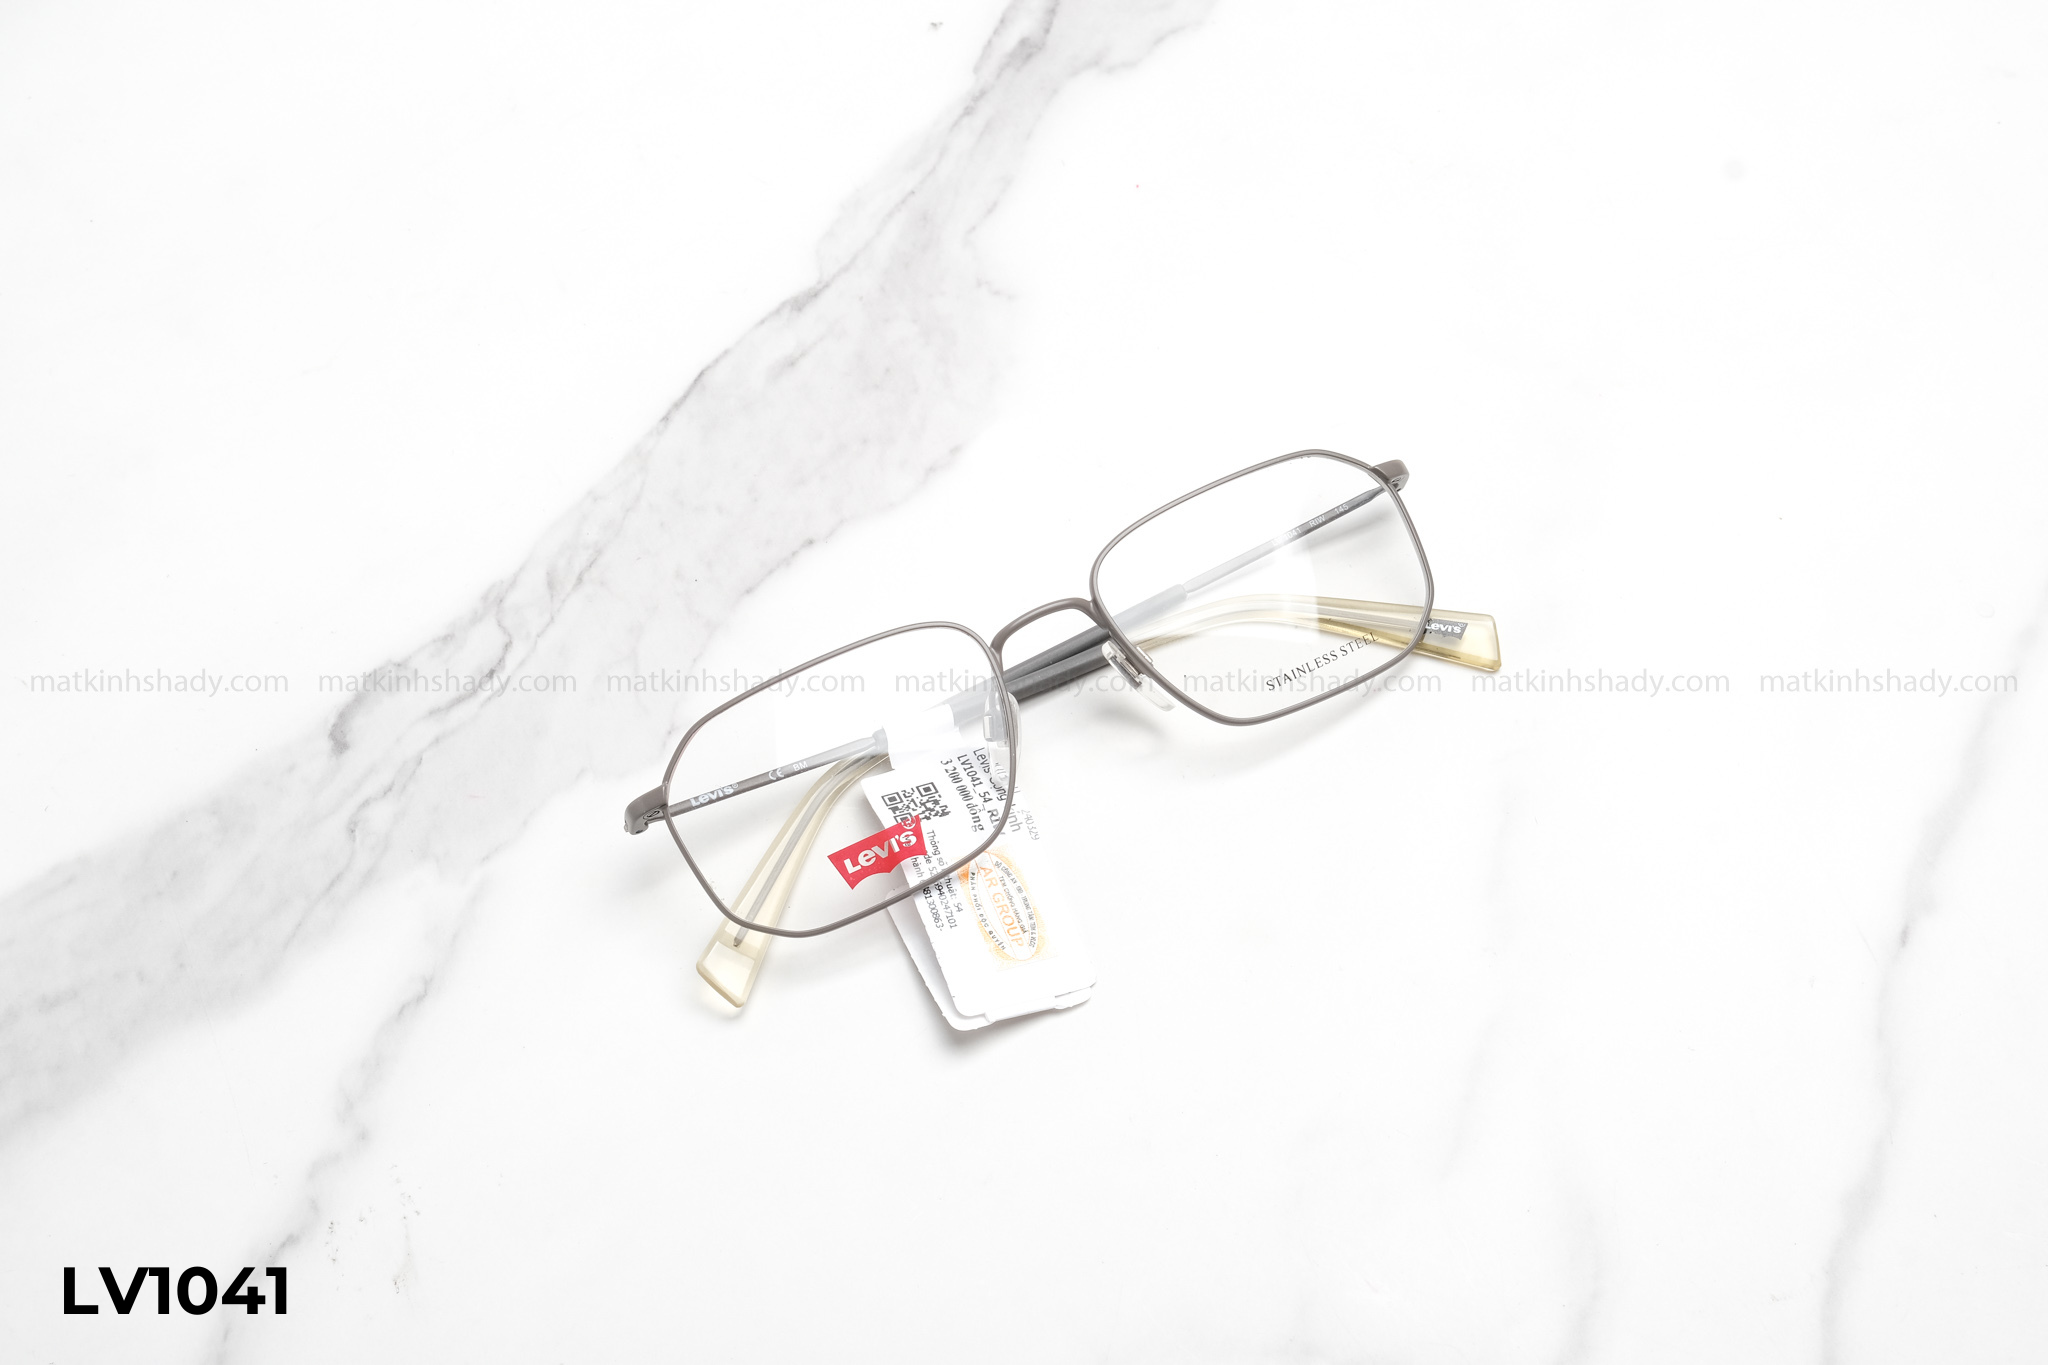  Levi's Eyewear - Glasses - LV1041 